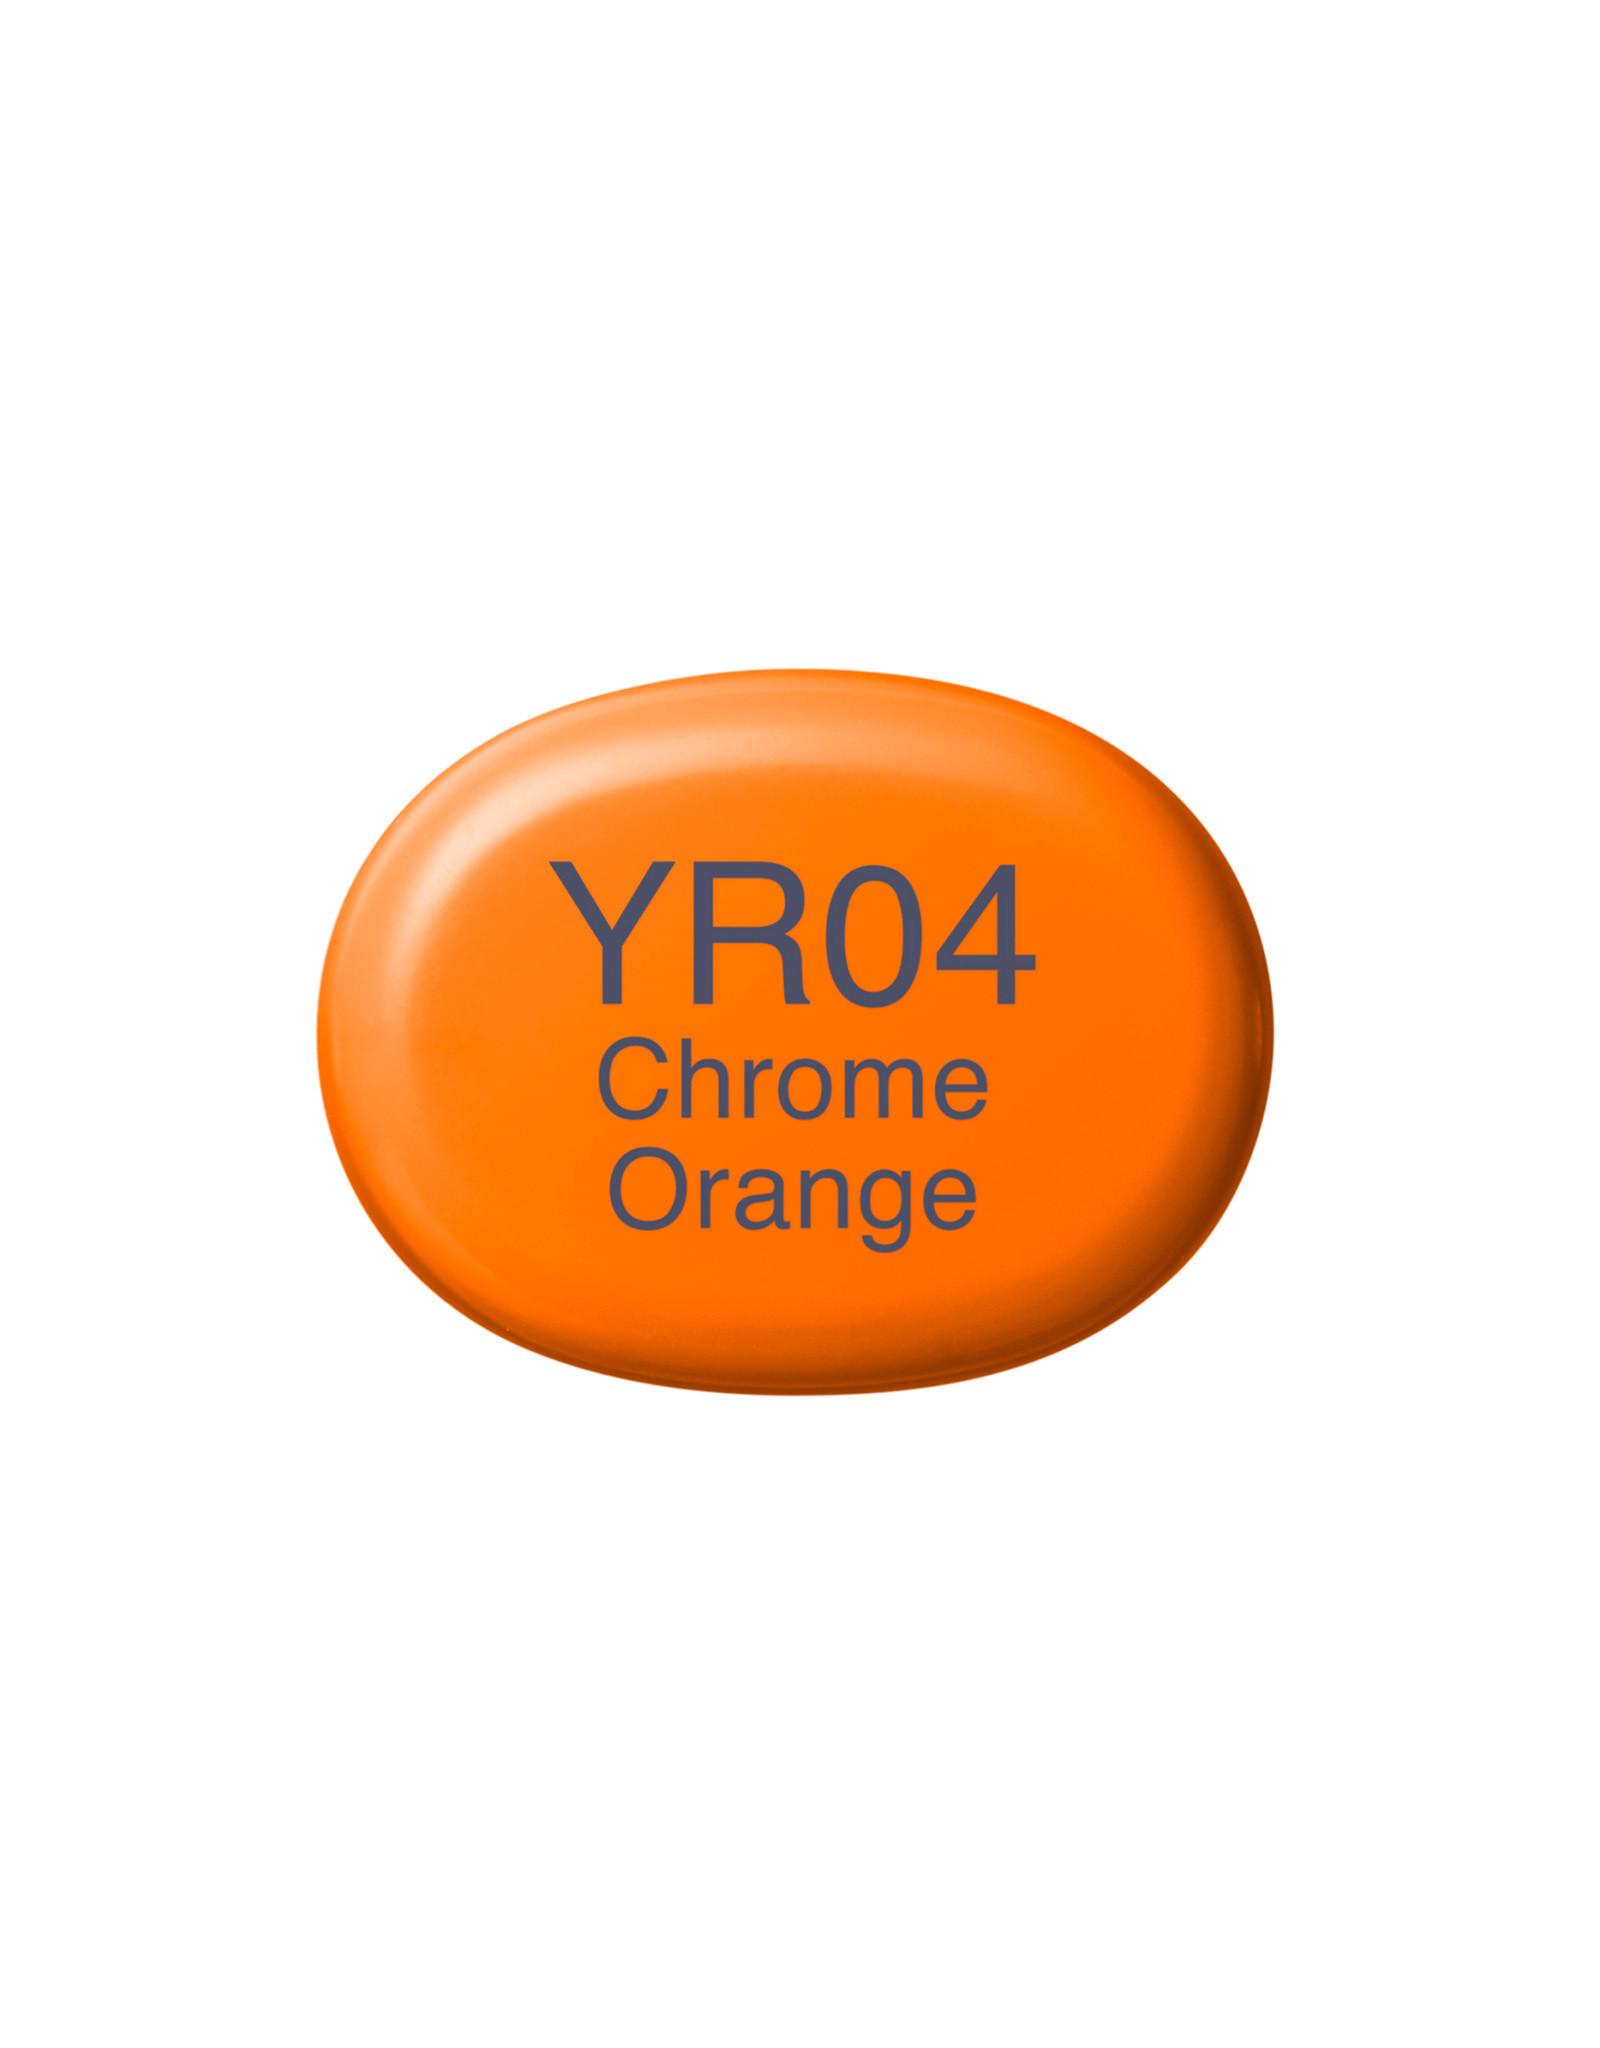 COPIC COPIC Sketch Marker YR04 Chrome Orange